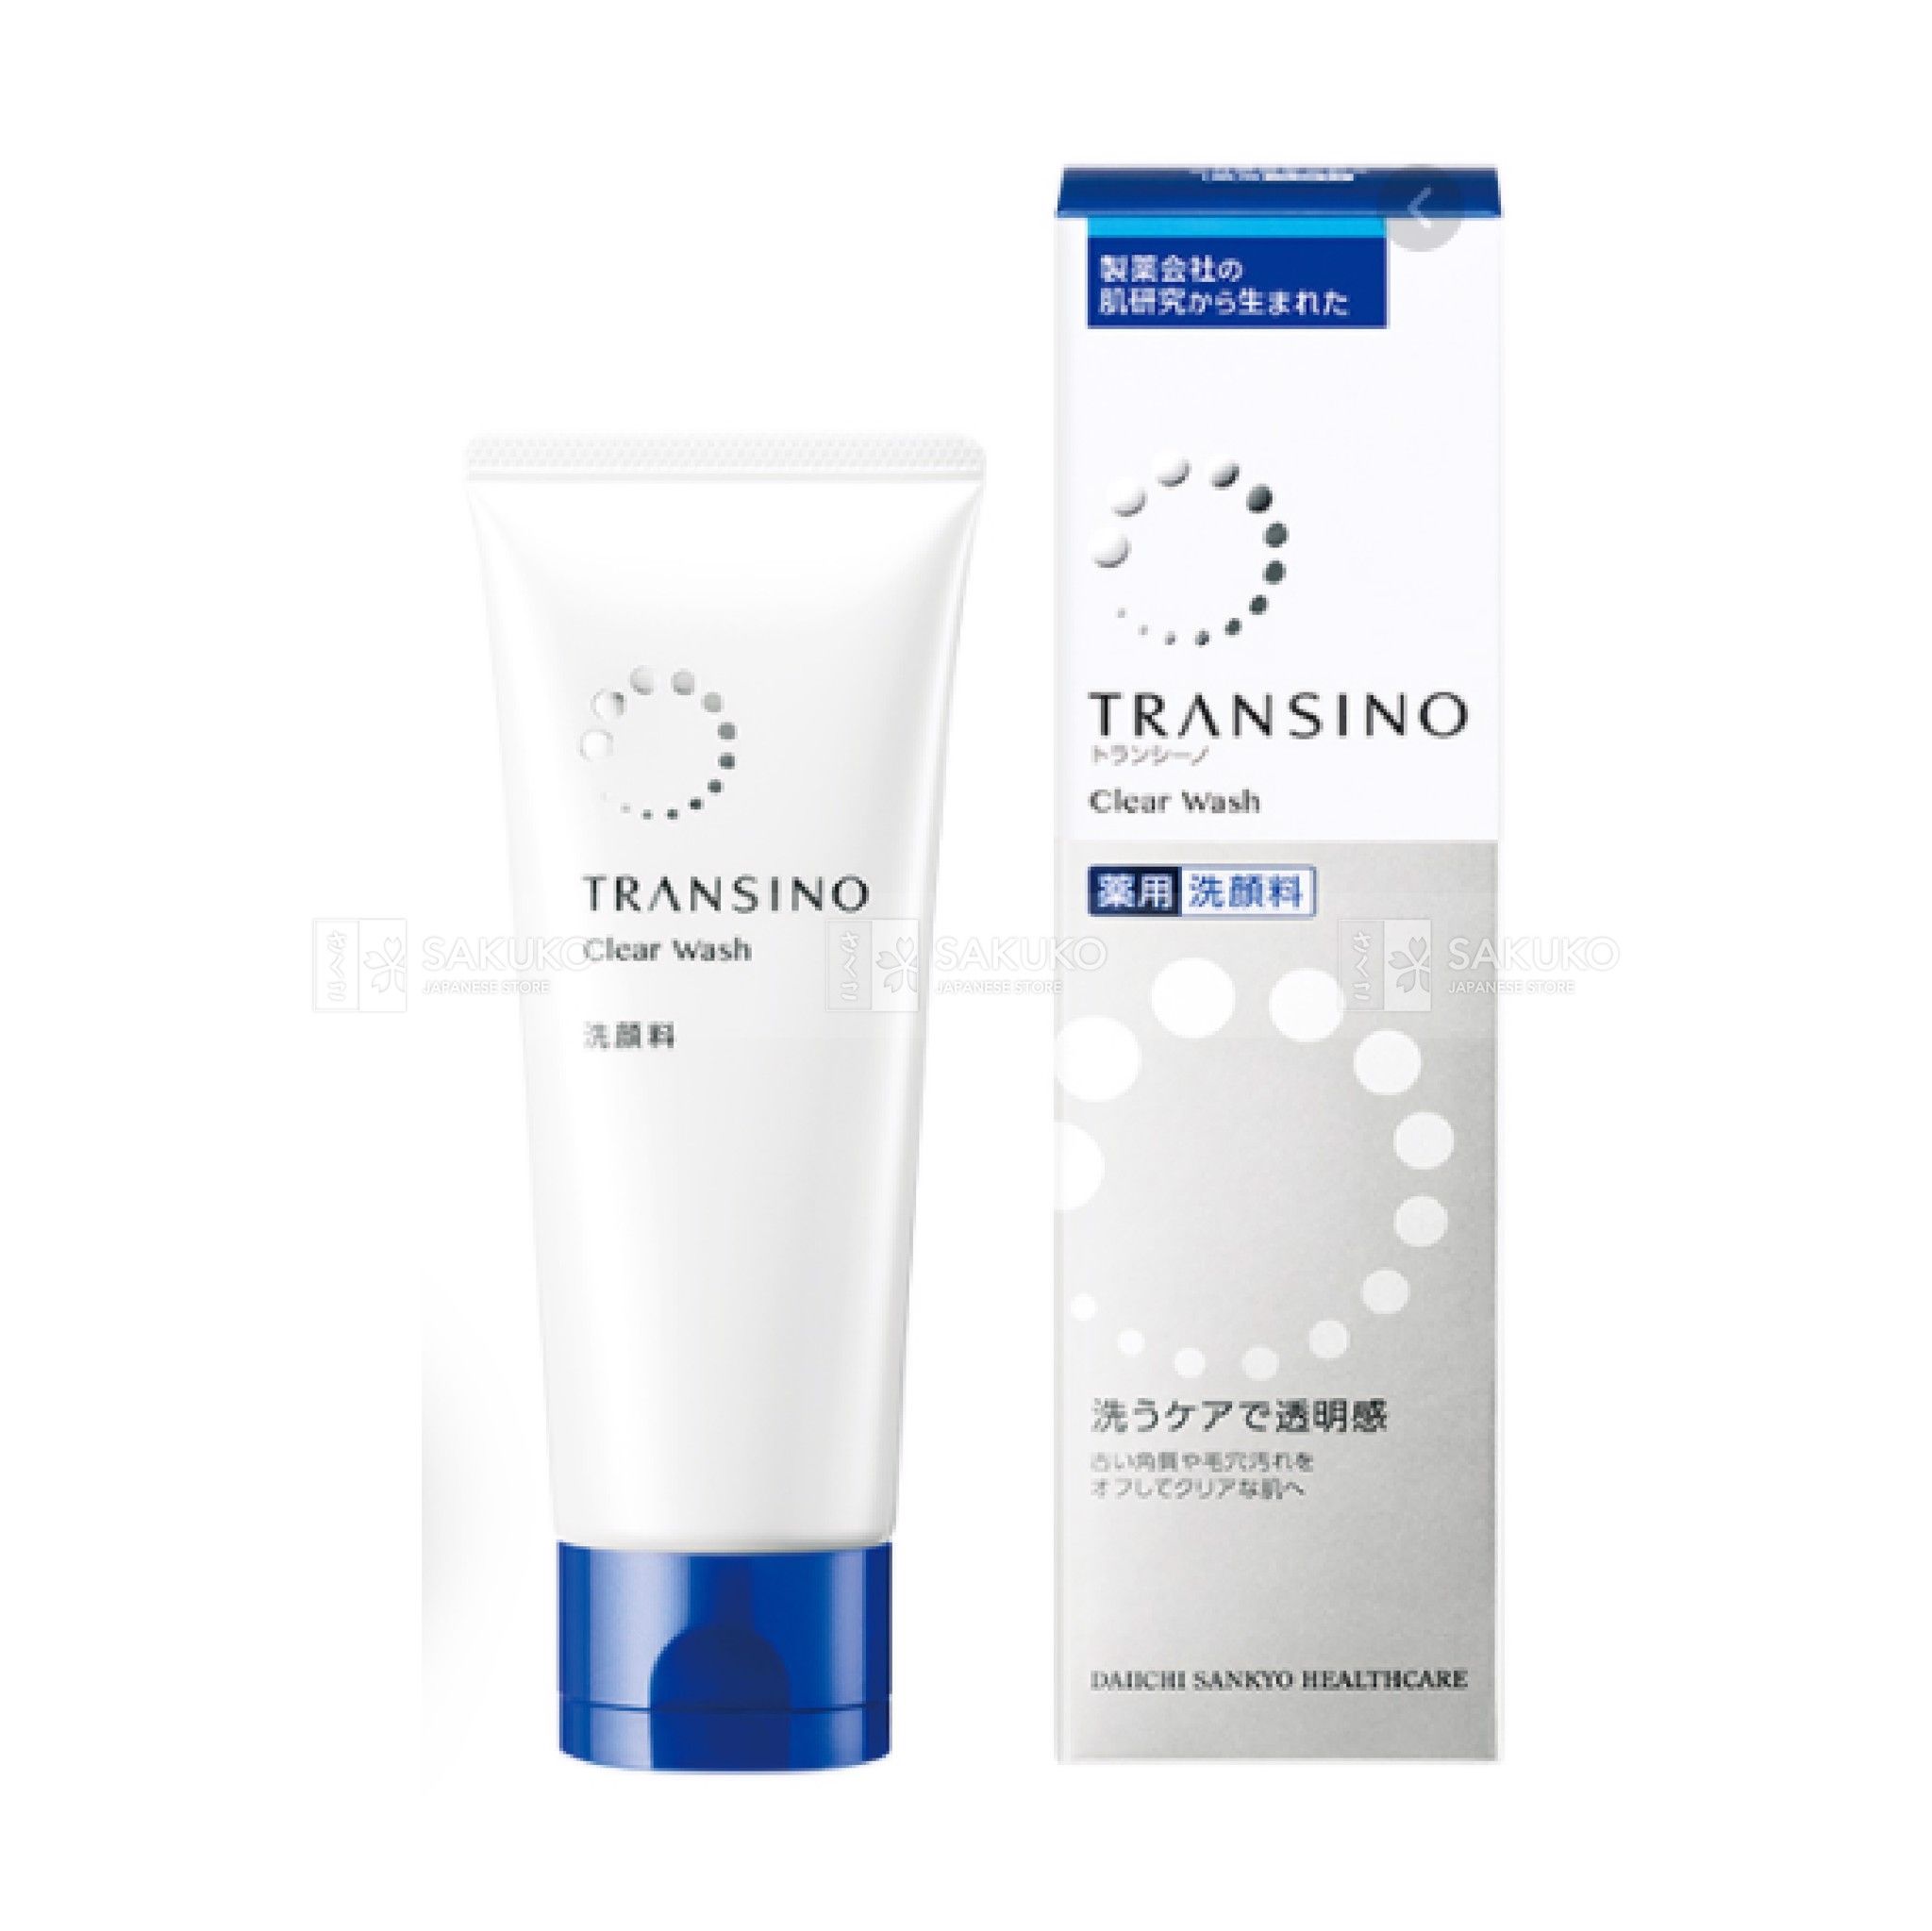  TRANSINO-SRM trắng da Transino Clear Wash 100g 